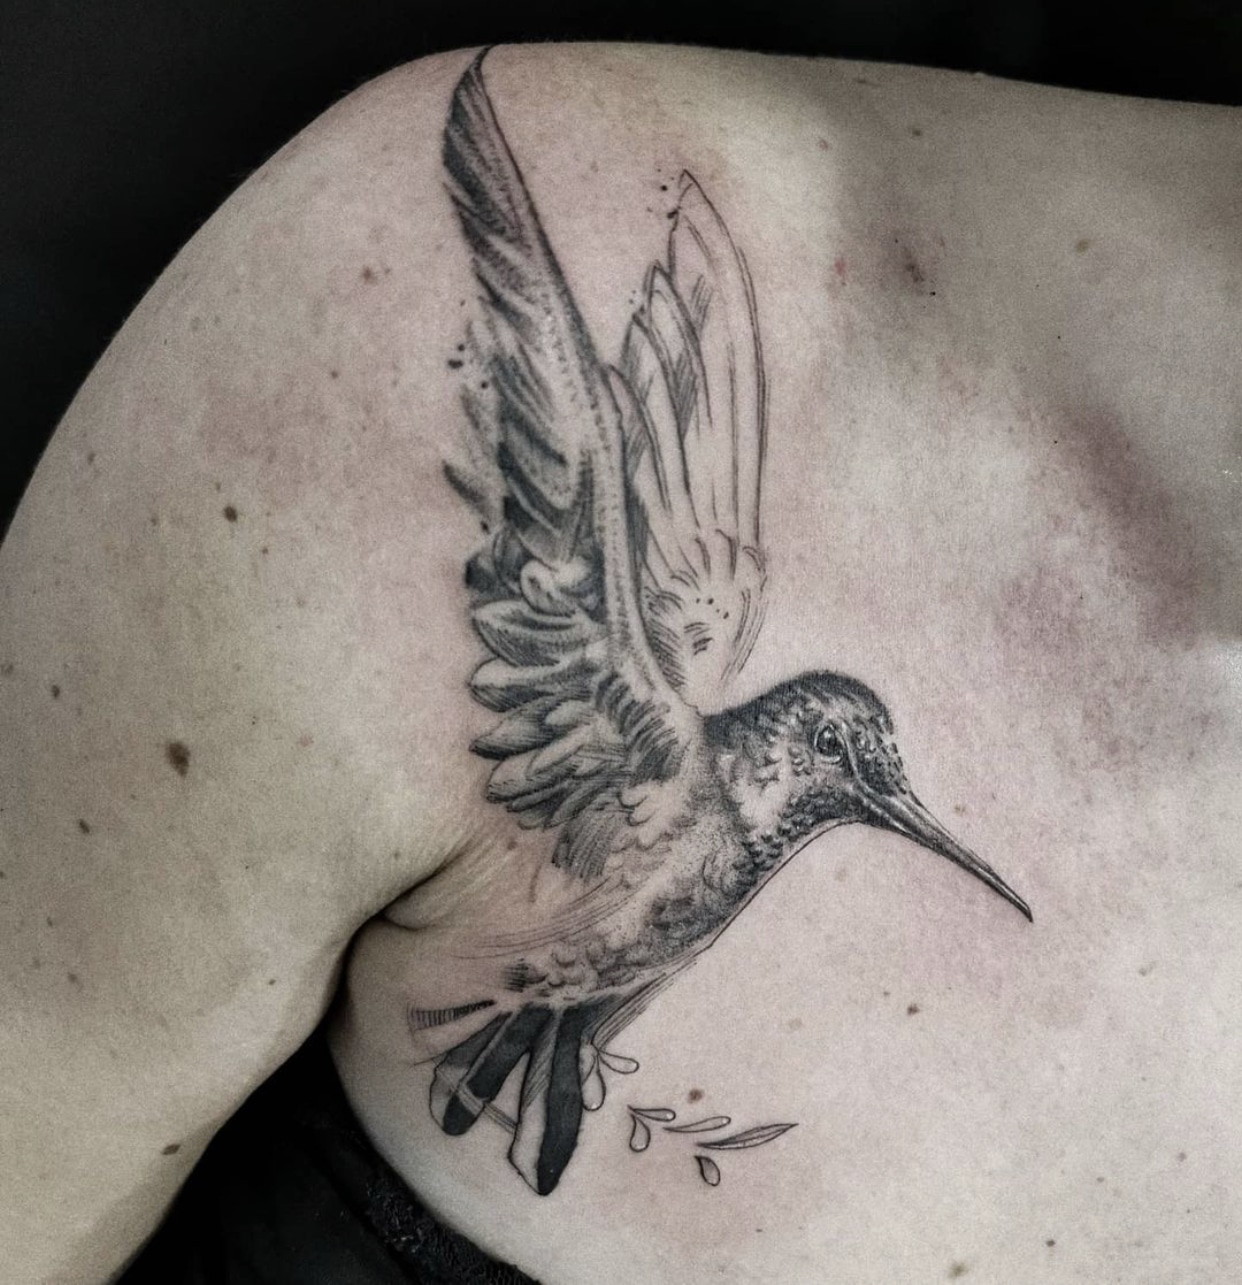 David-Carvajal-tattoo-09